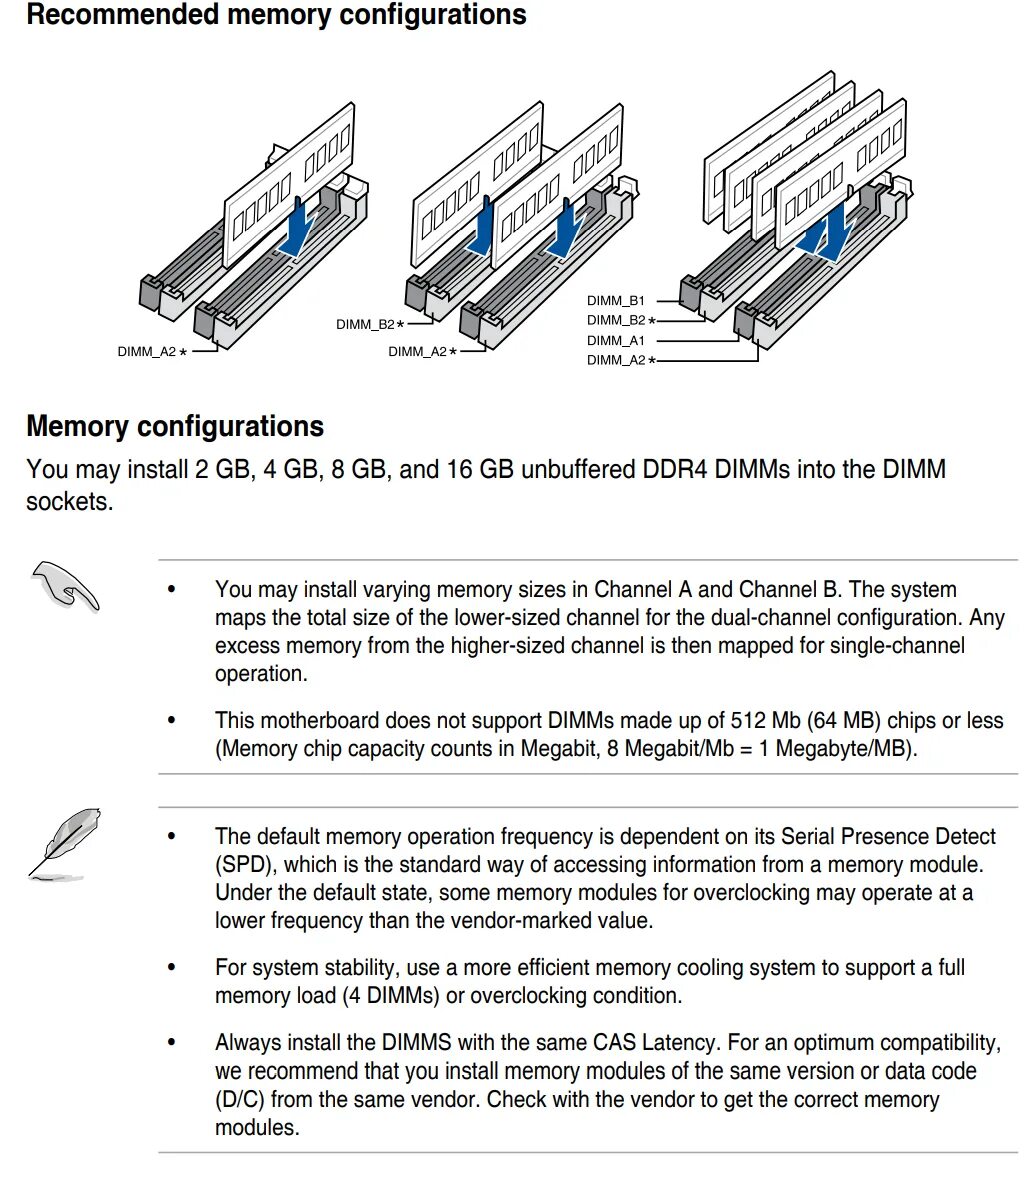 Memory channels. Что такое DIMM a1 и DIMM b1. Установка DIMM. Ram Dual channel. DIMM слоты порядок работы.